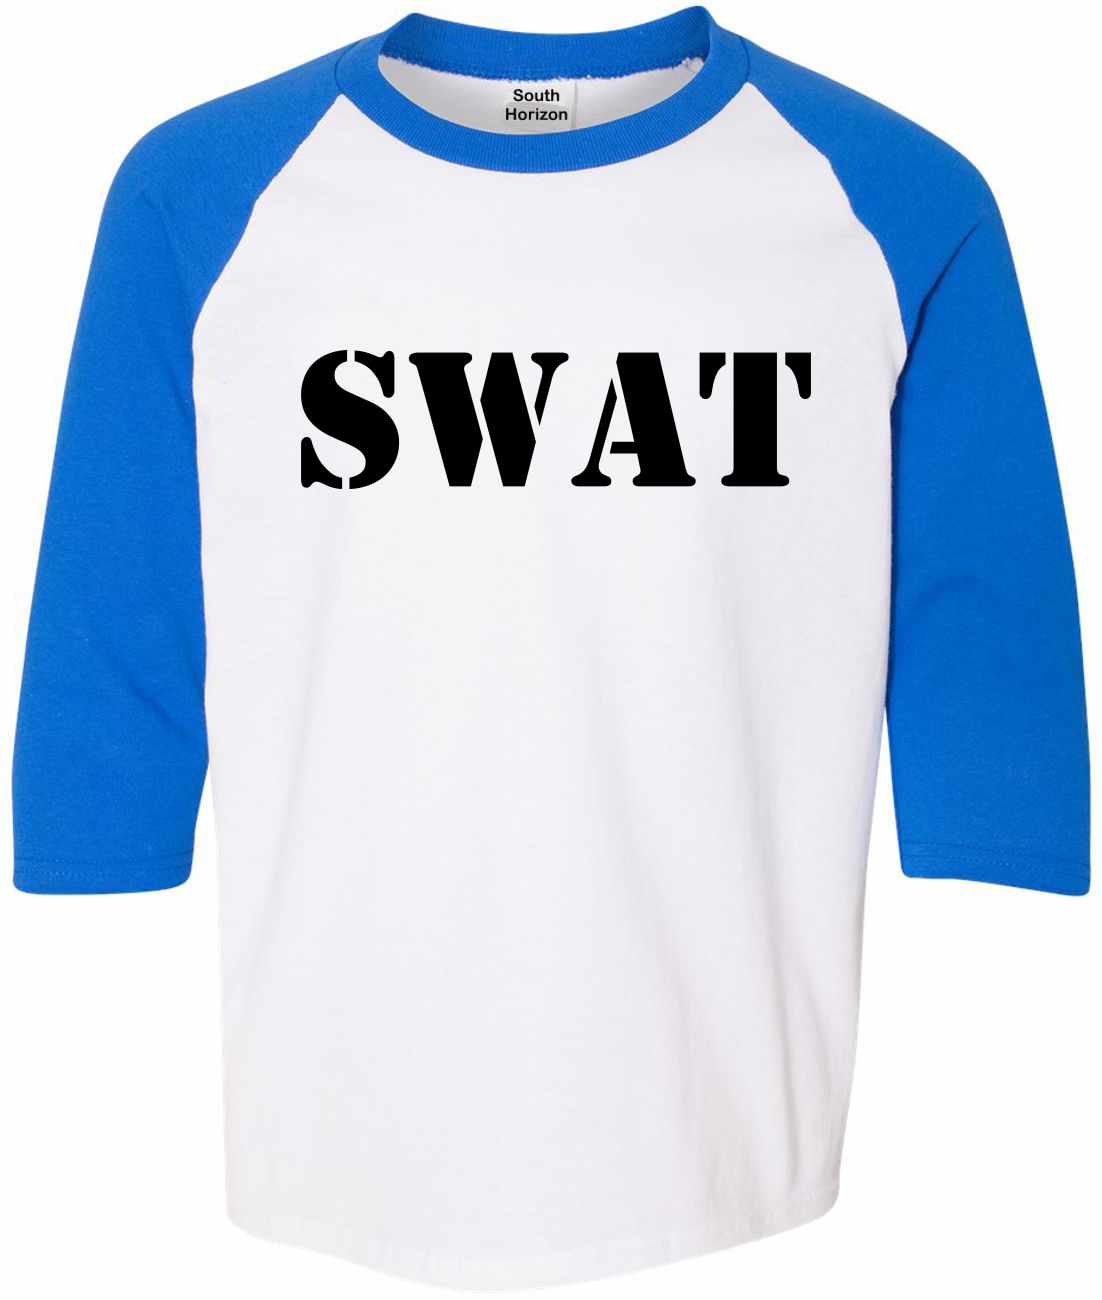 SWAT on Youth Baseball Shirt (#247-212)